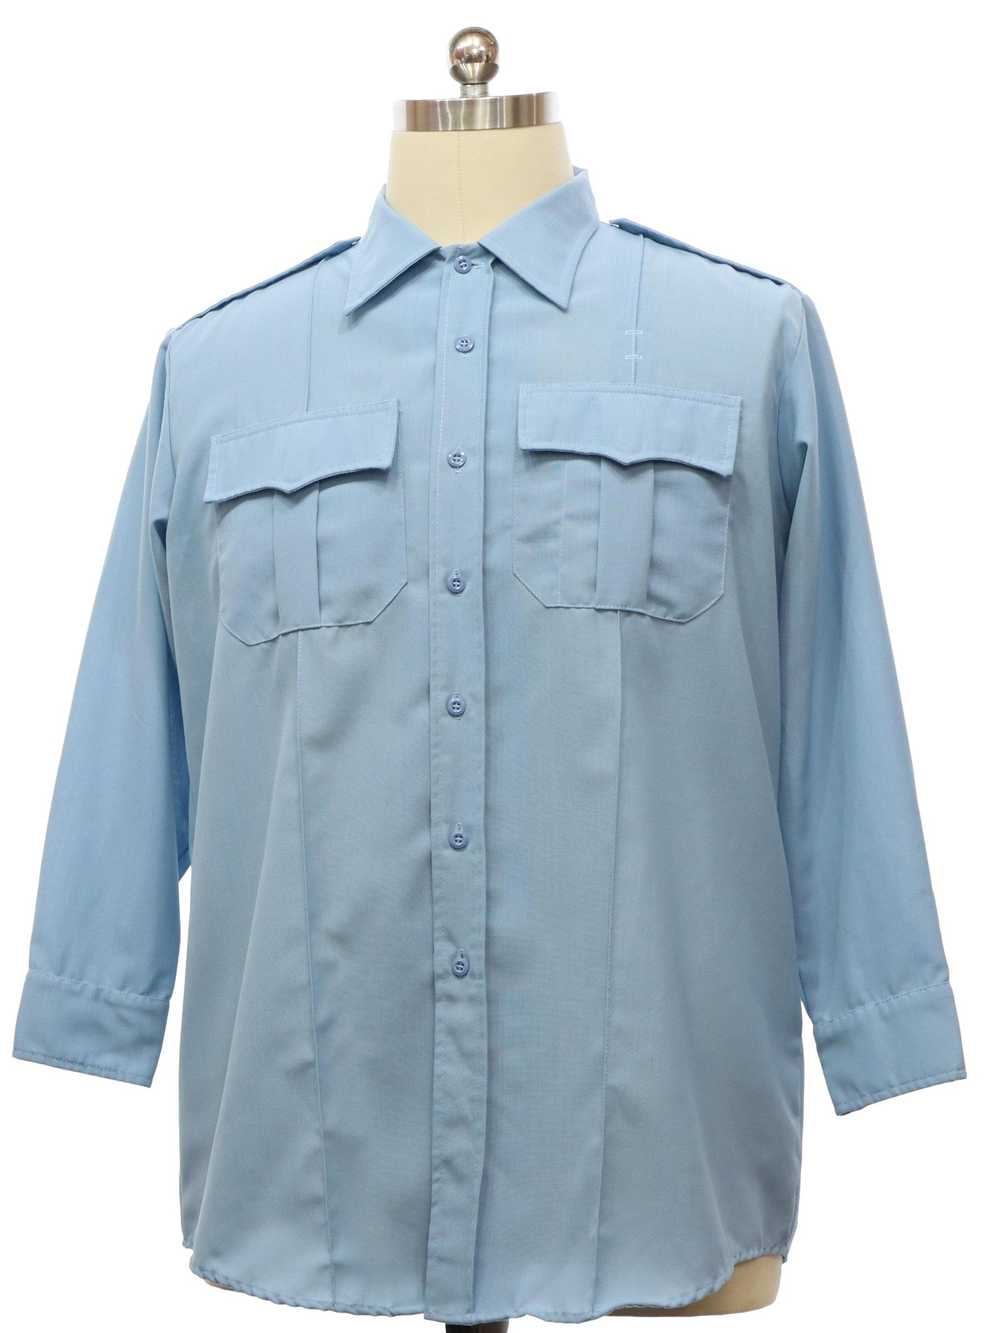 1980's Juniper Valley Mens Uniform Work Shirt - Gem